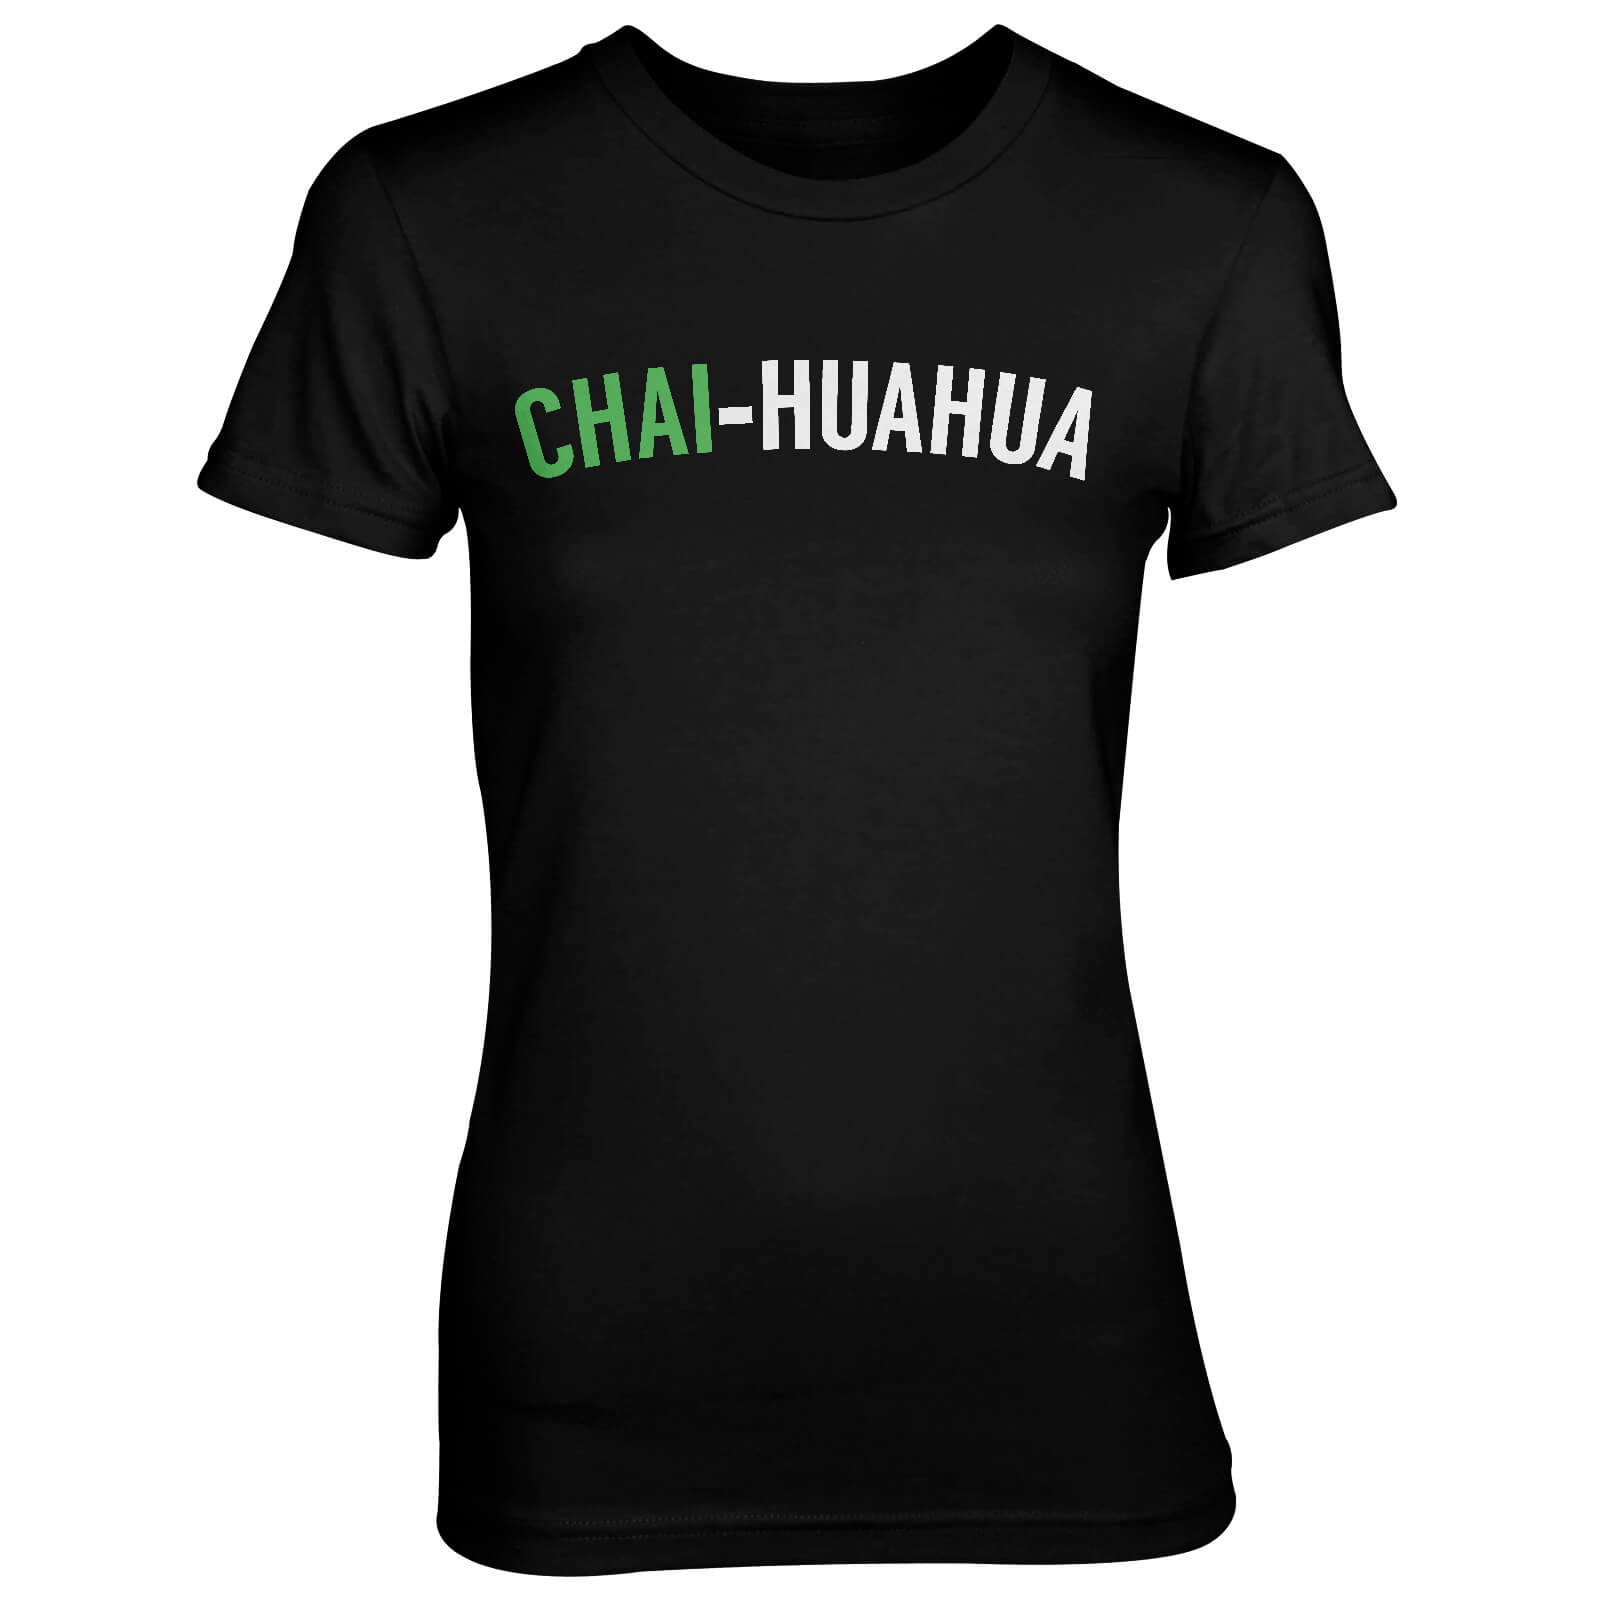 Chai-huahua Women's Black T-Shirt - S - Black